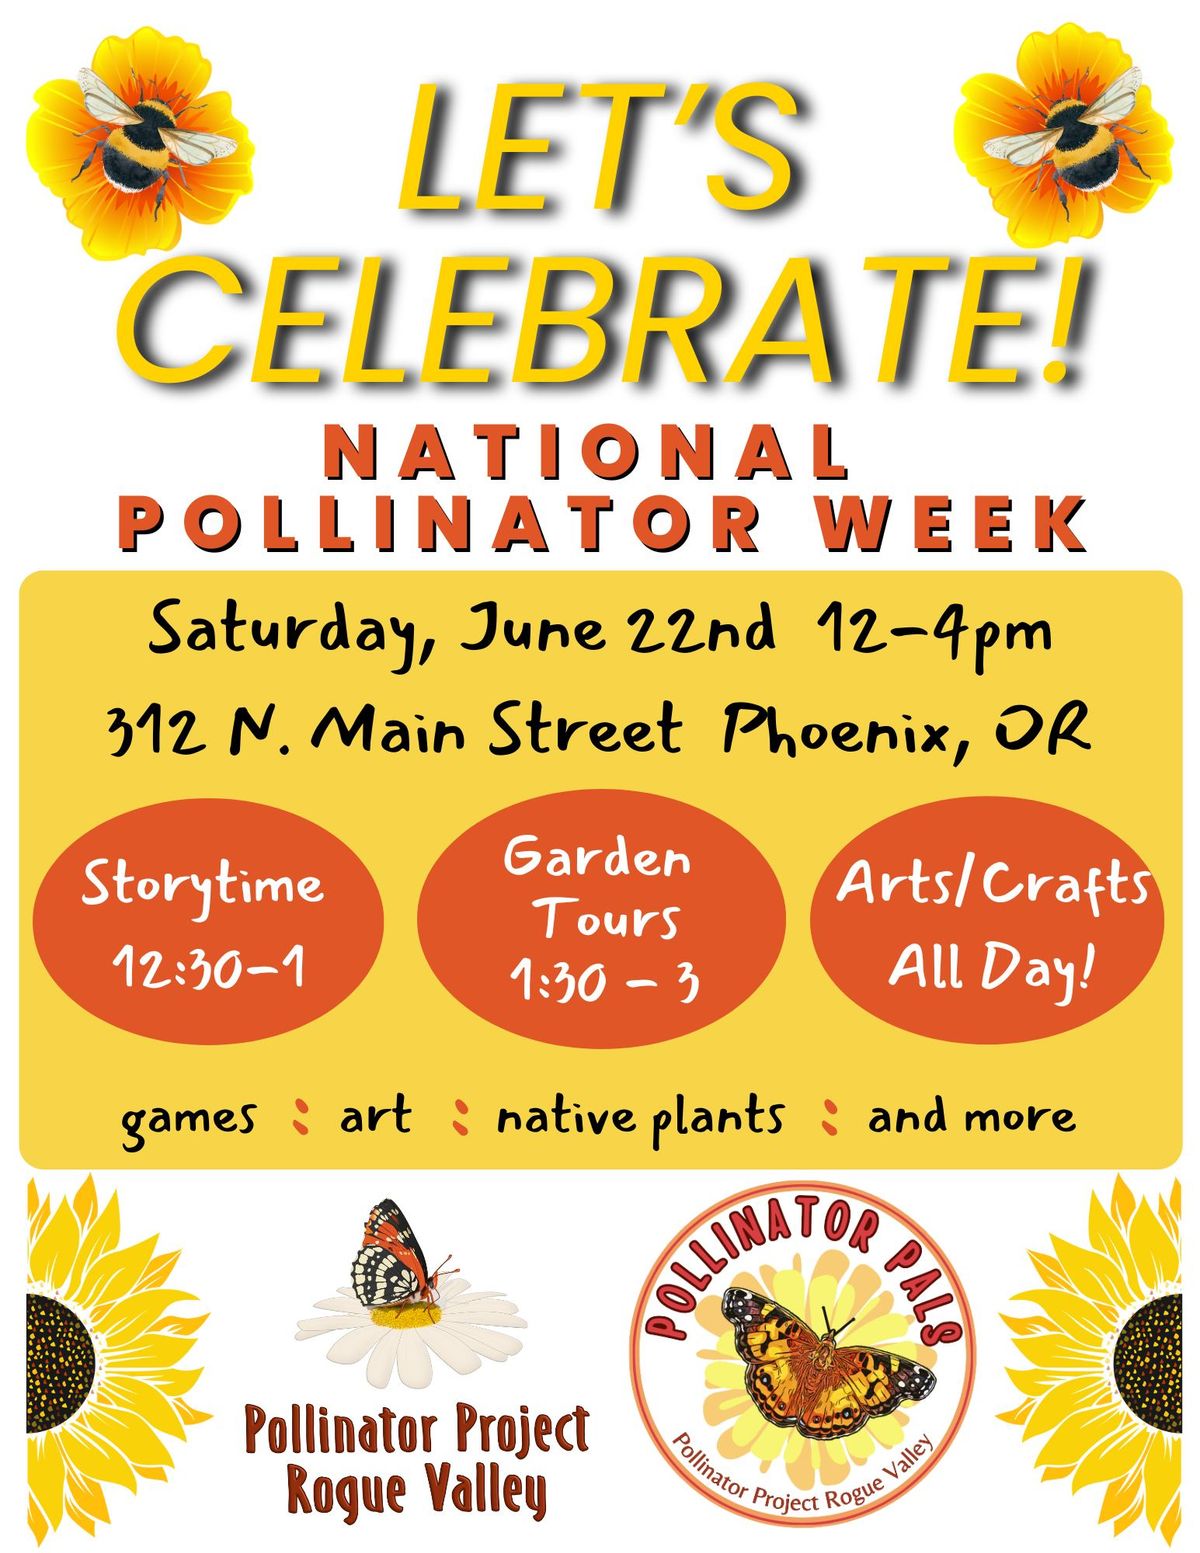 Let's Celebrate National Pollinator Week!